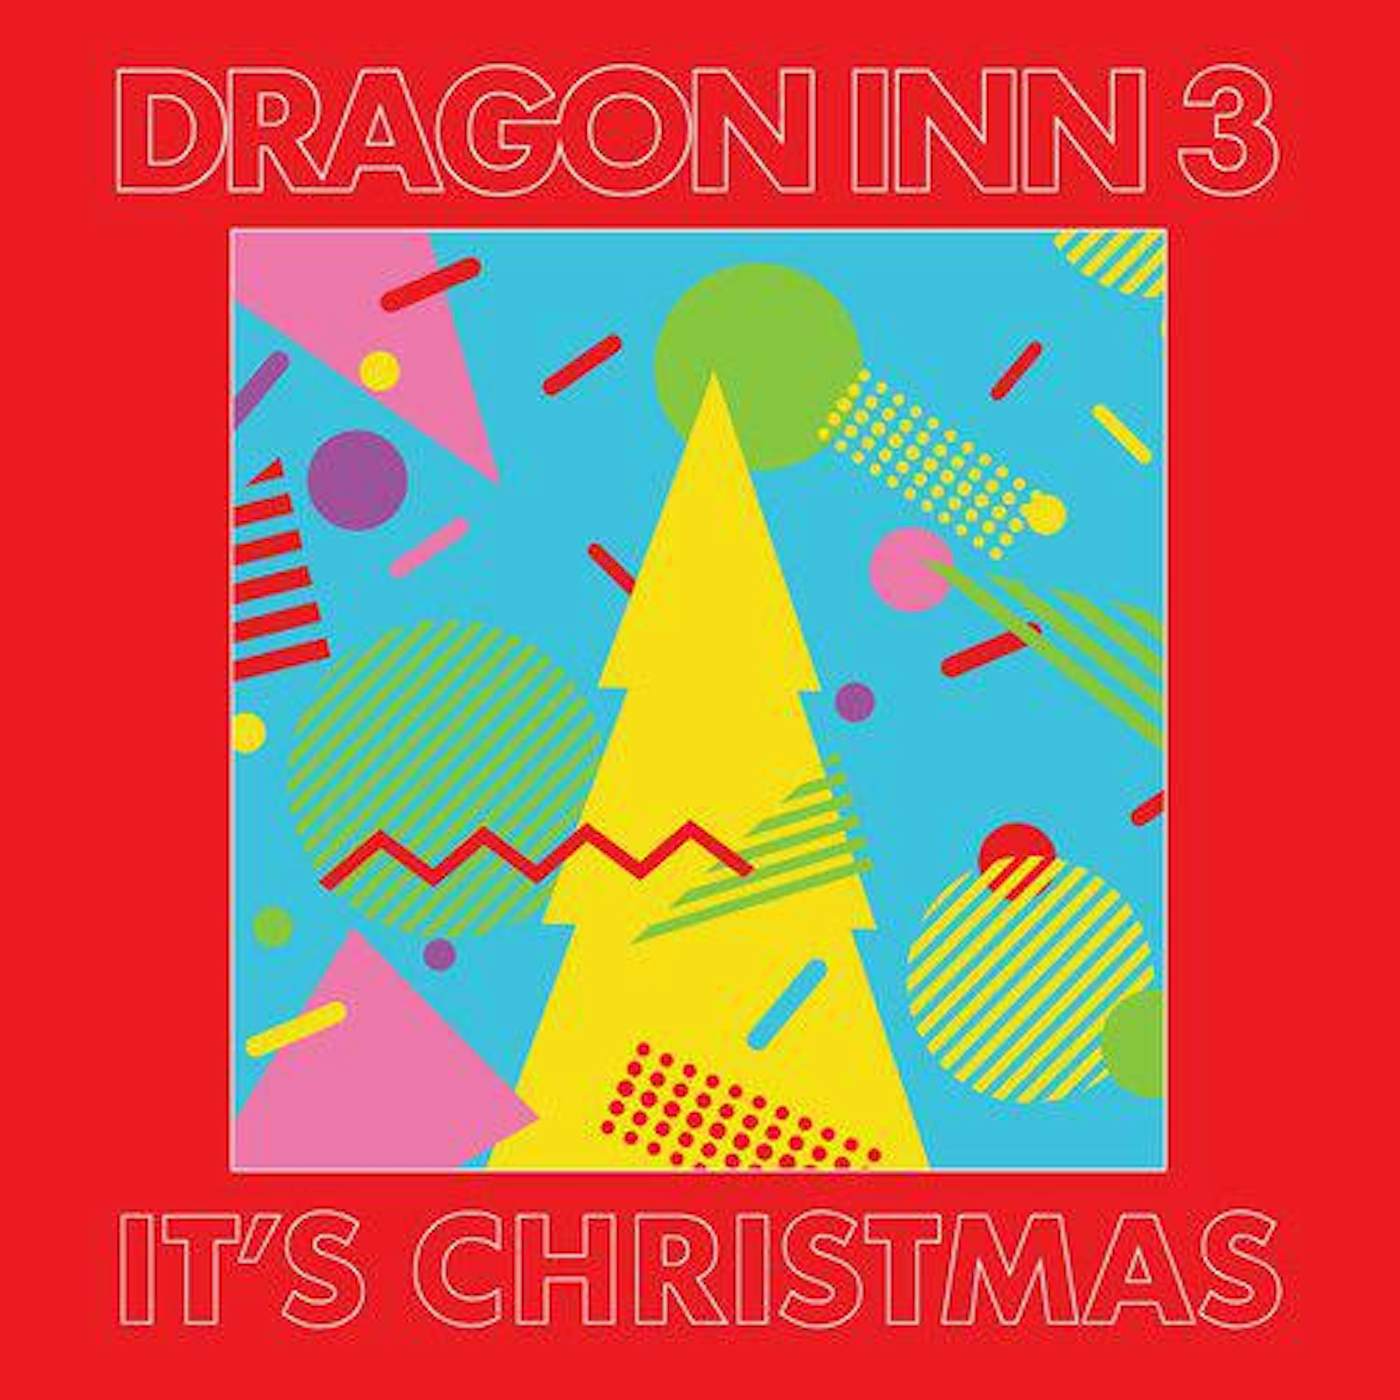 Dragon Inn 3 It's Christmas (7"/White) Vinyl Record